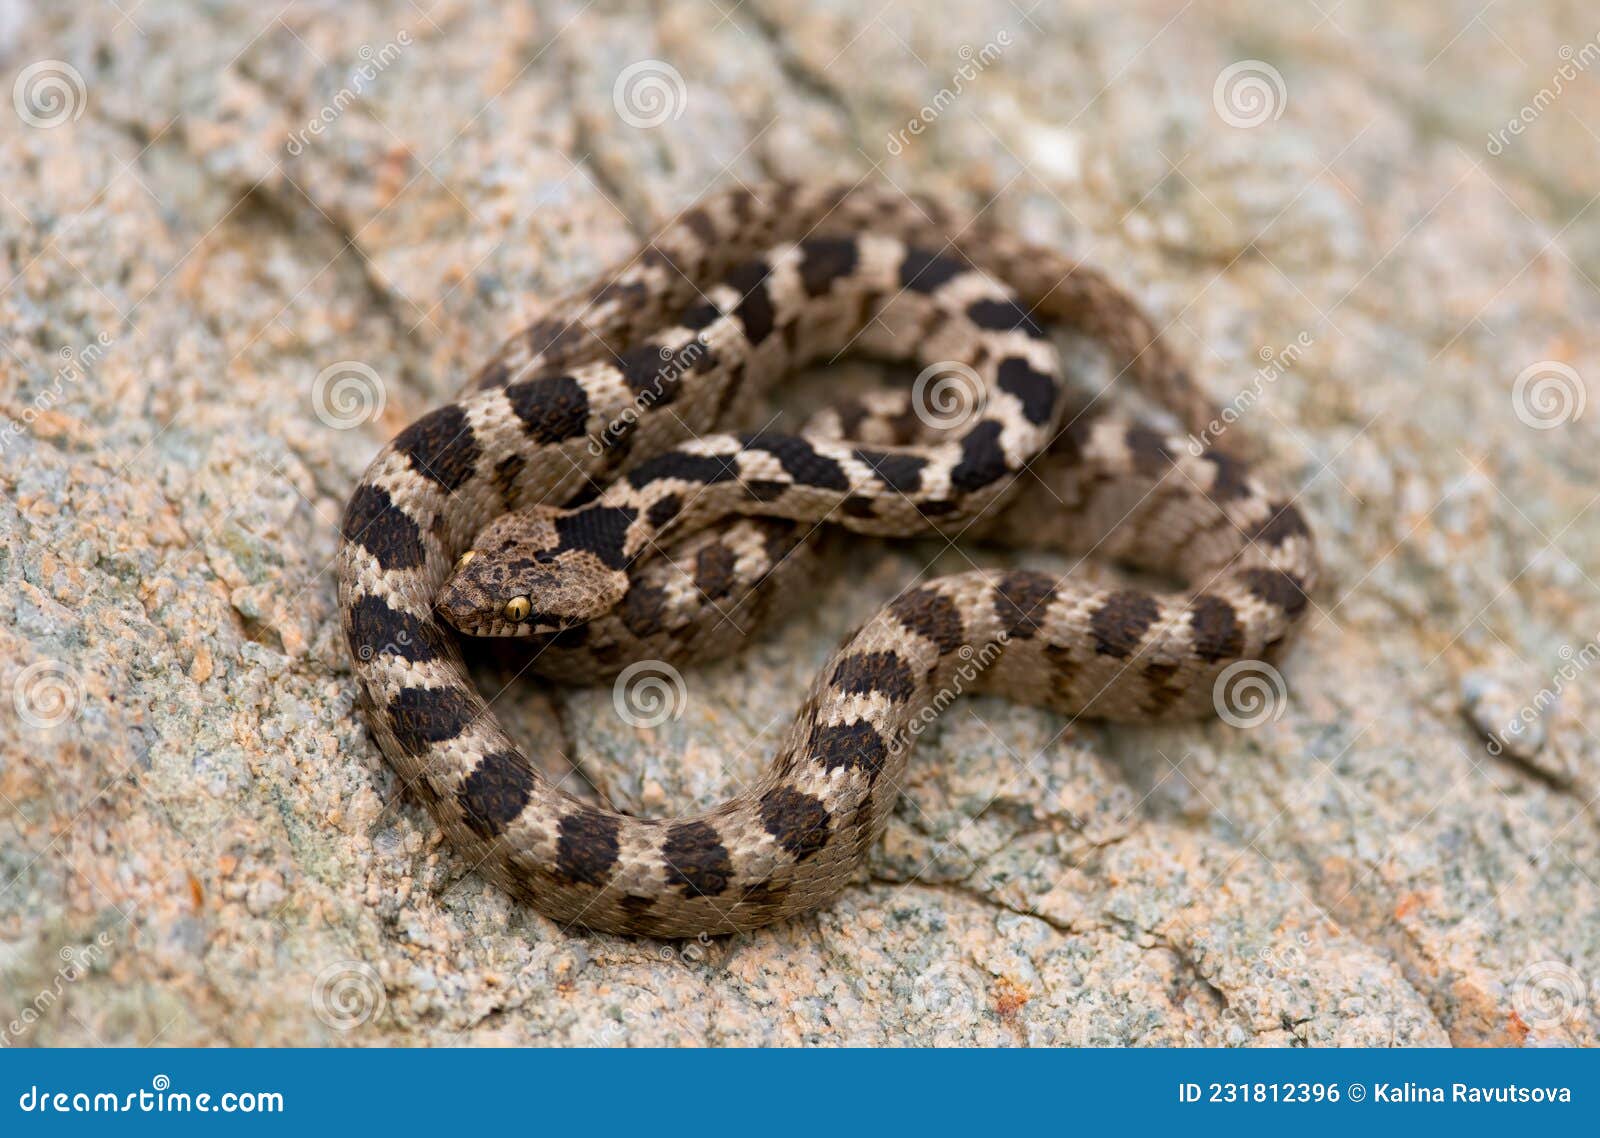 european cat snake telescopus fallax, also known as the soosan snake, on a rock